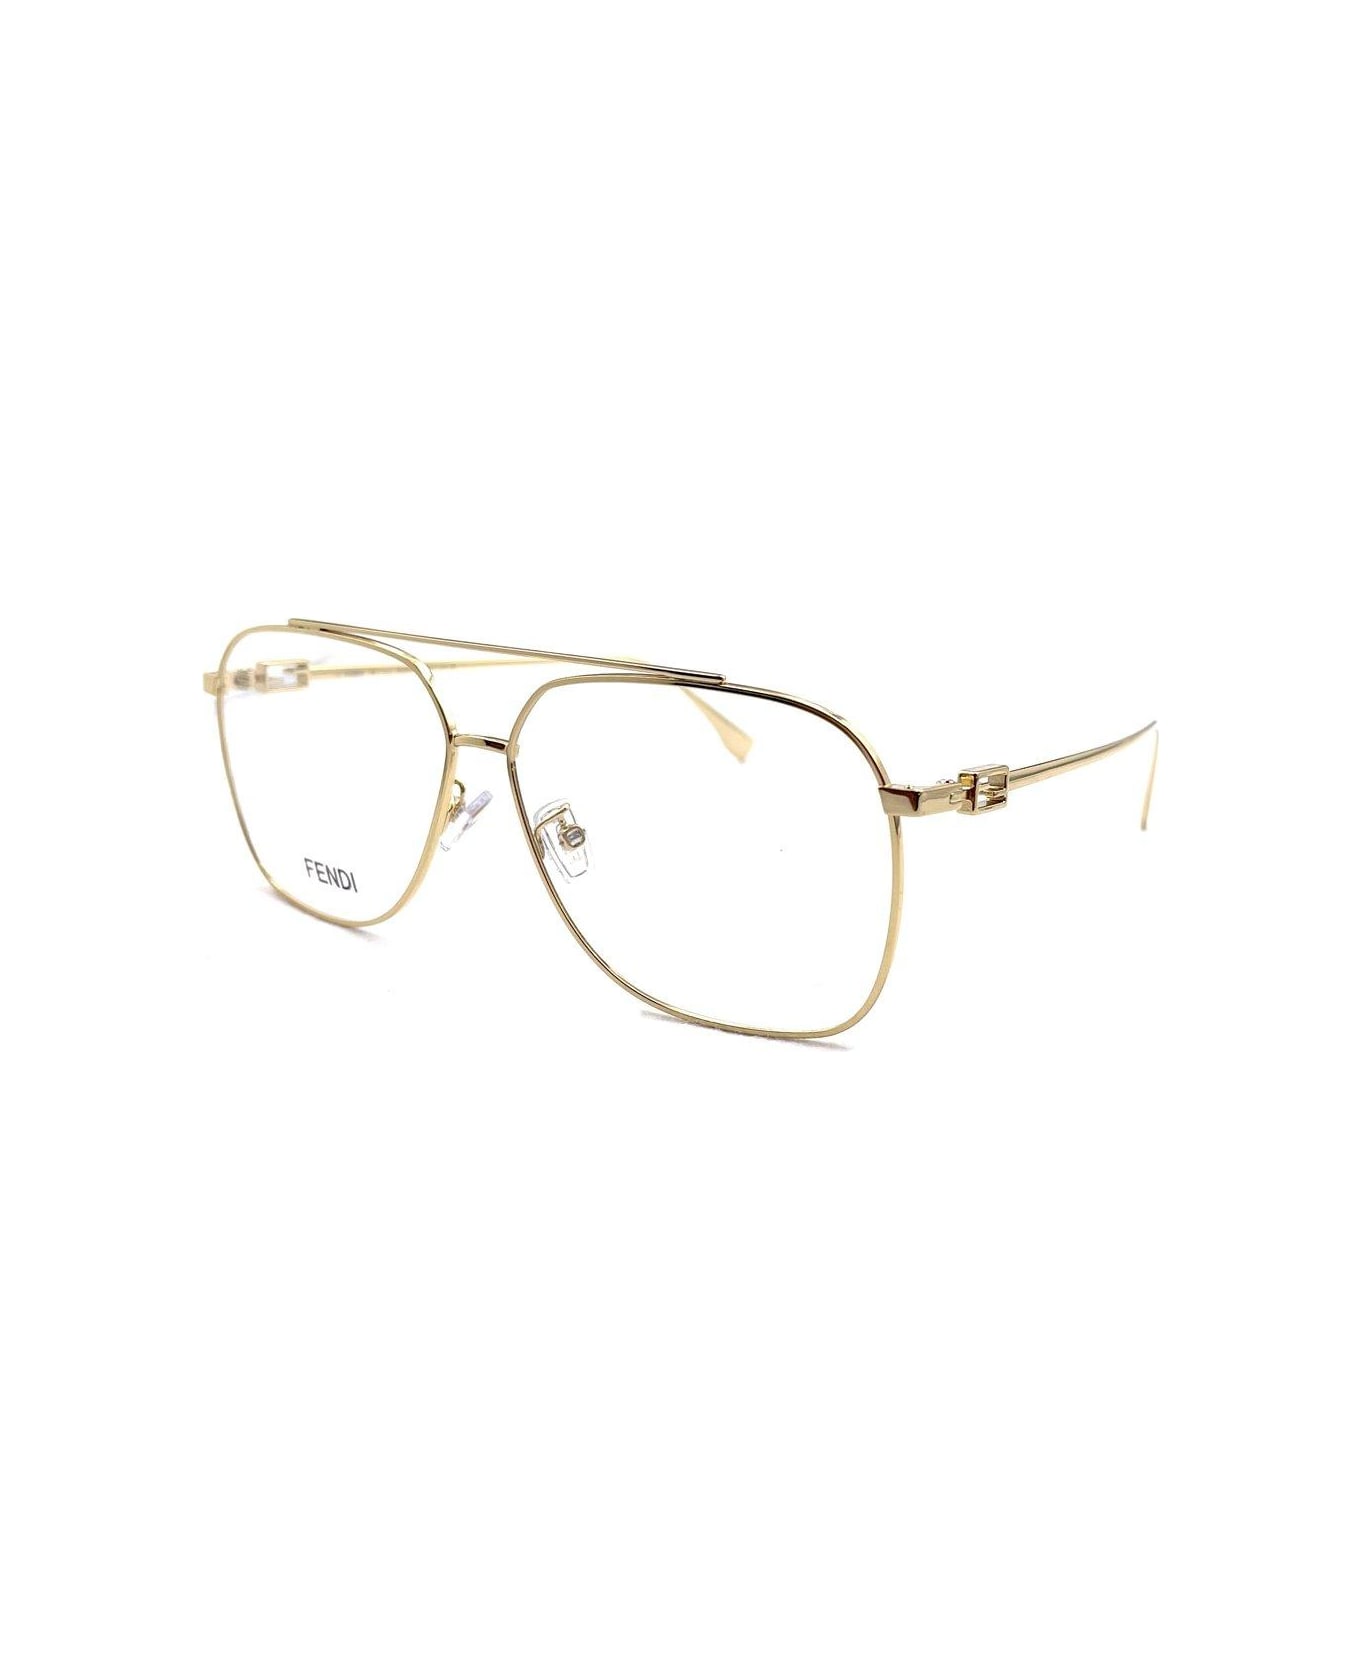 Fendi Eyewear Aviator Glasses - 030